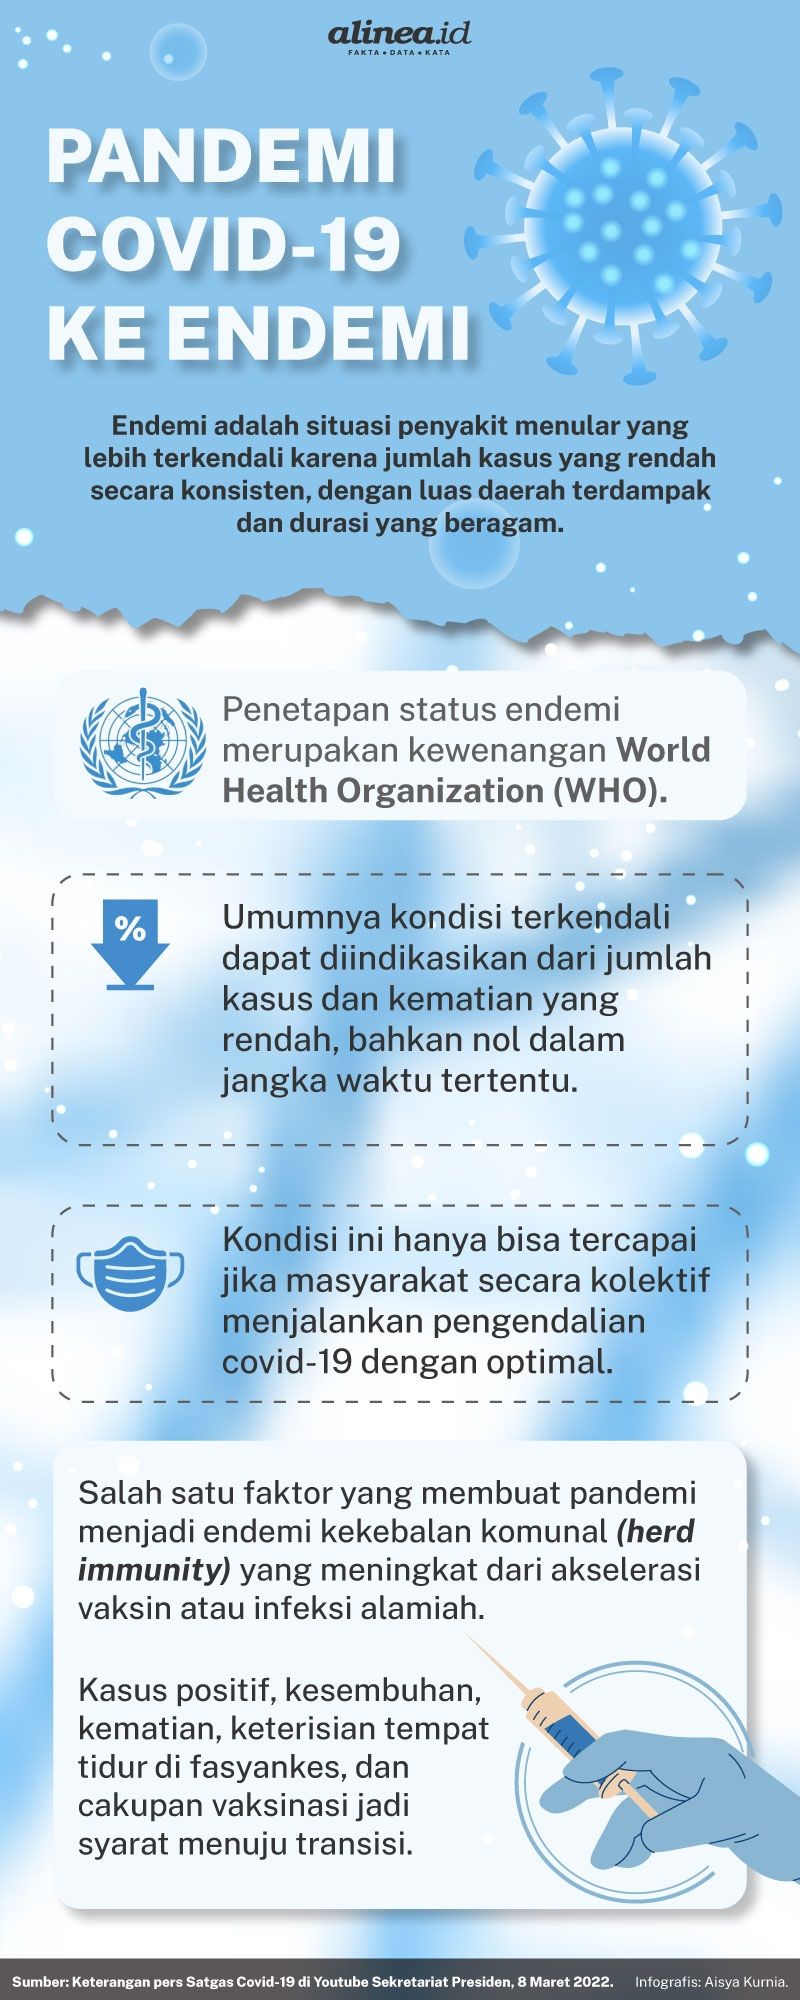 Infografik pandemi ke endemi. Alinea.id/Aisya Kurnia.